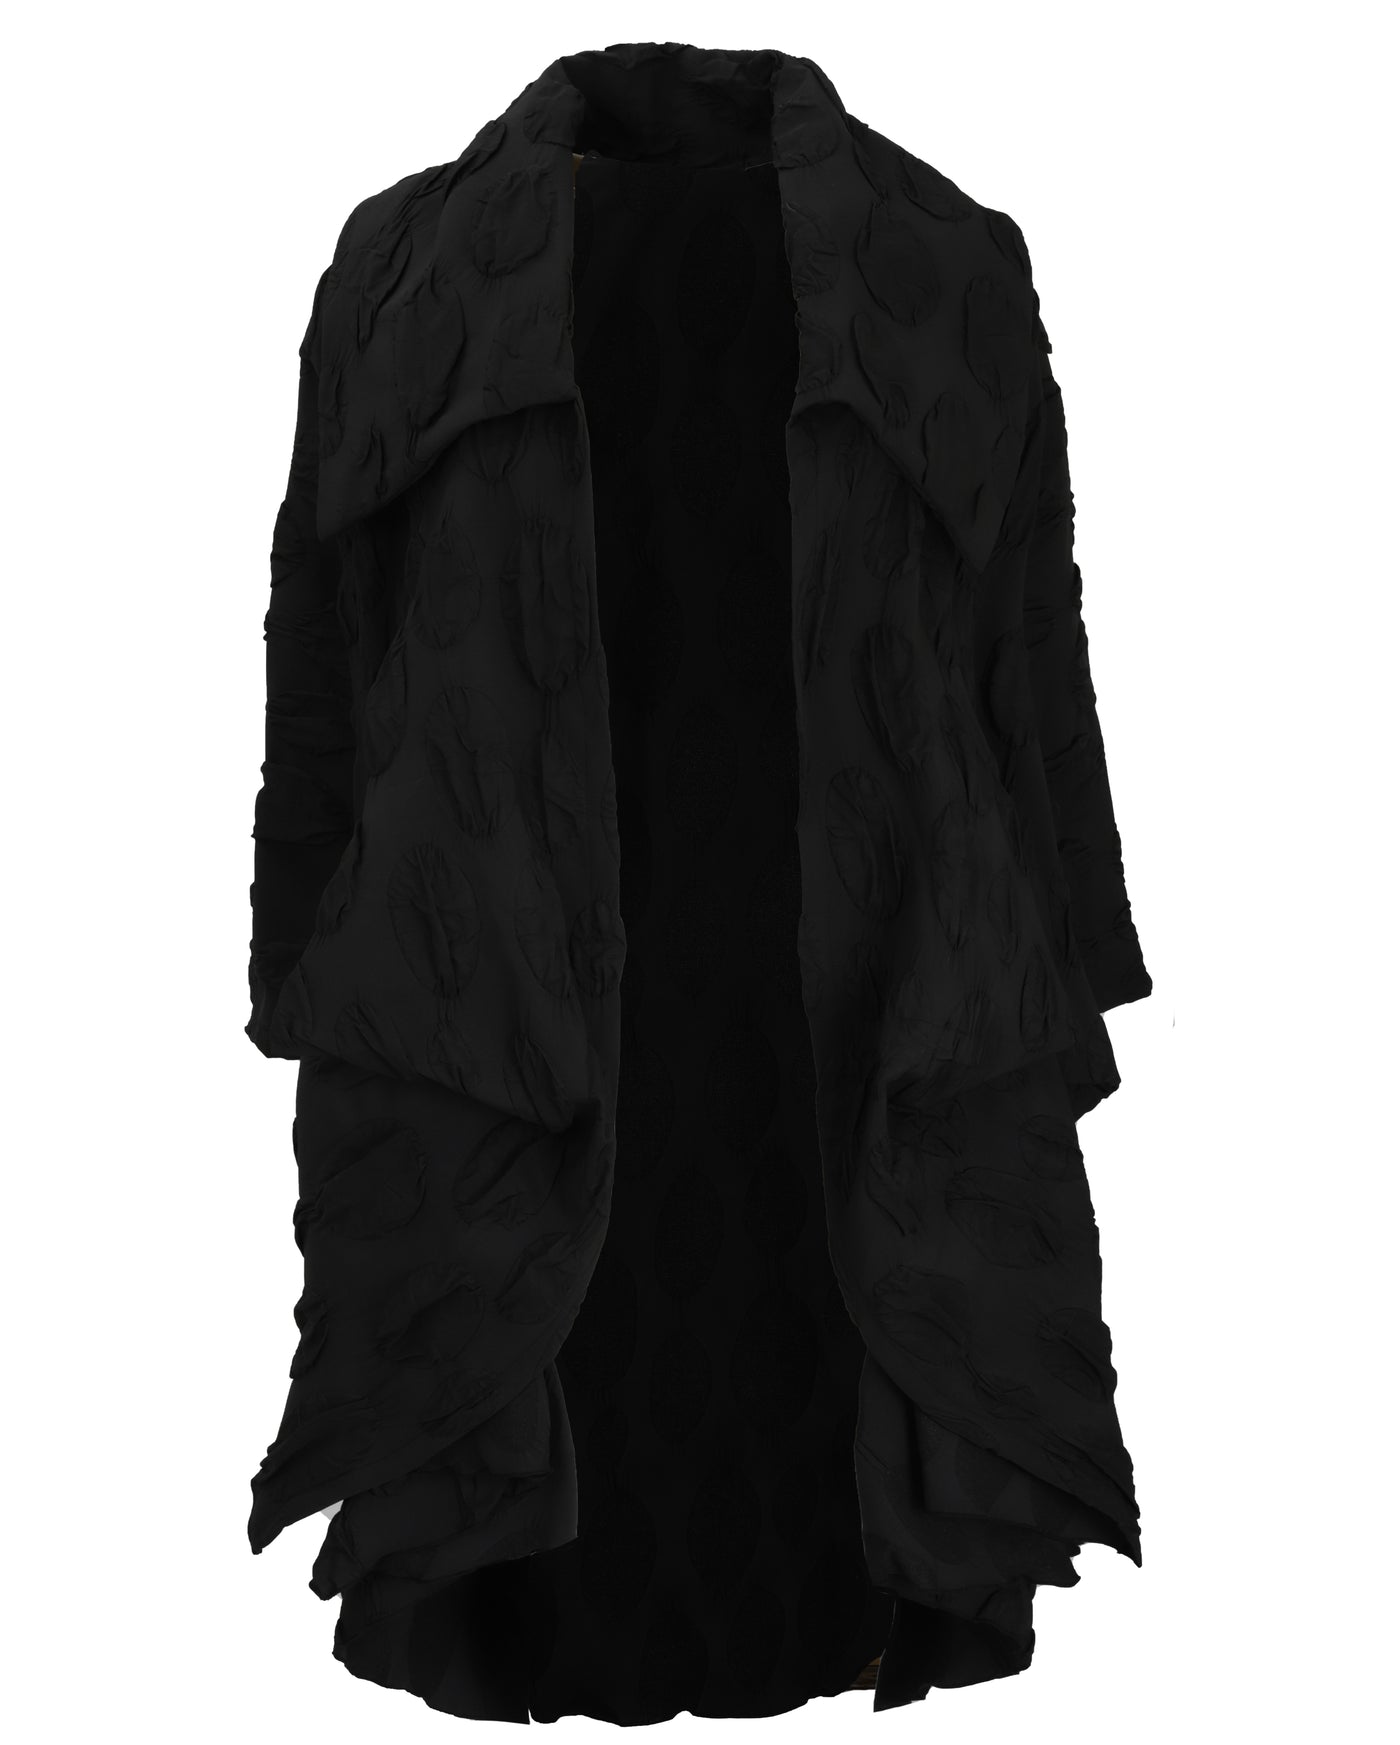 Heydari Small Bubble Jacket with Oversize Collar in Black